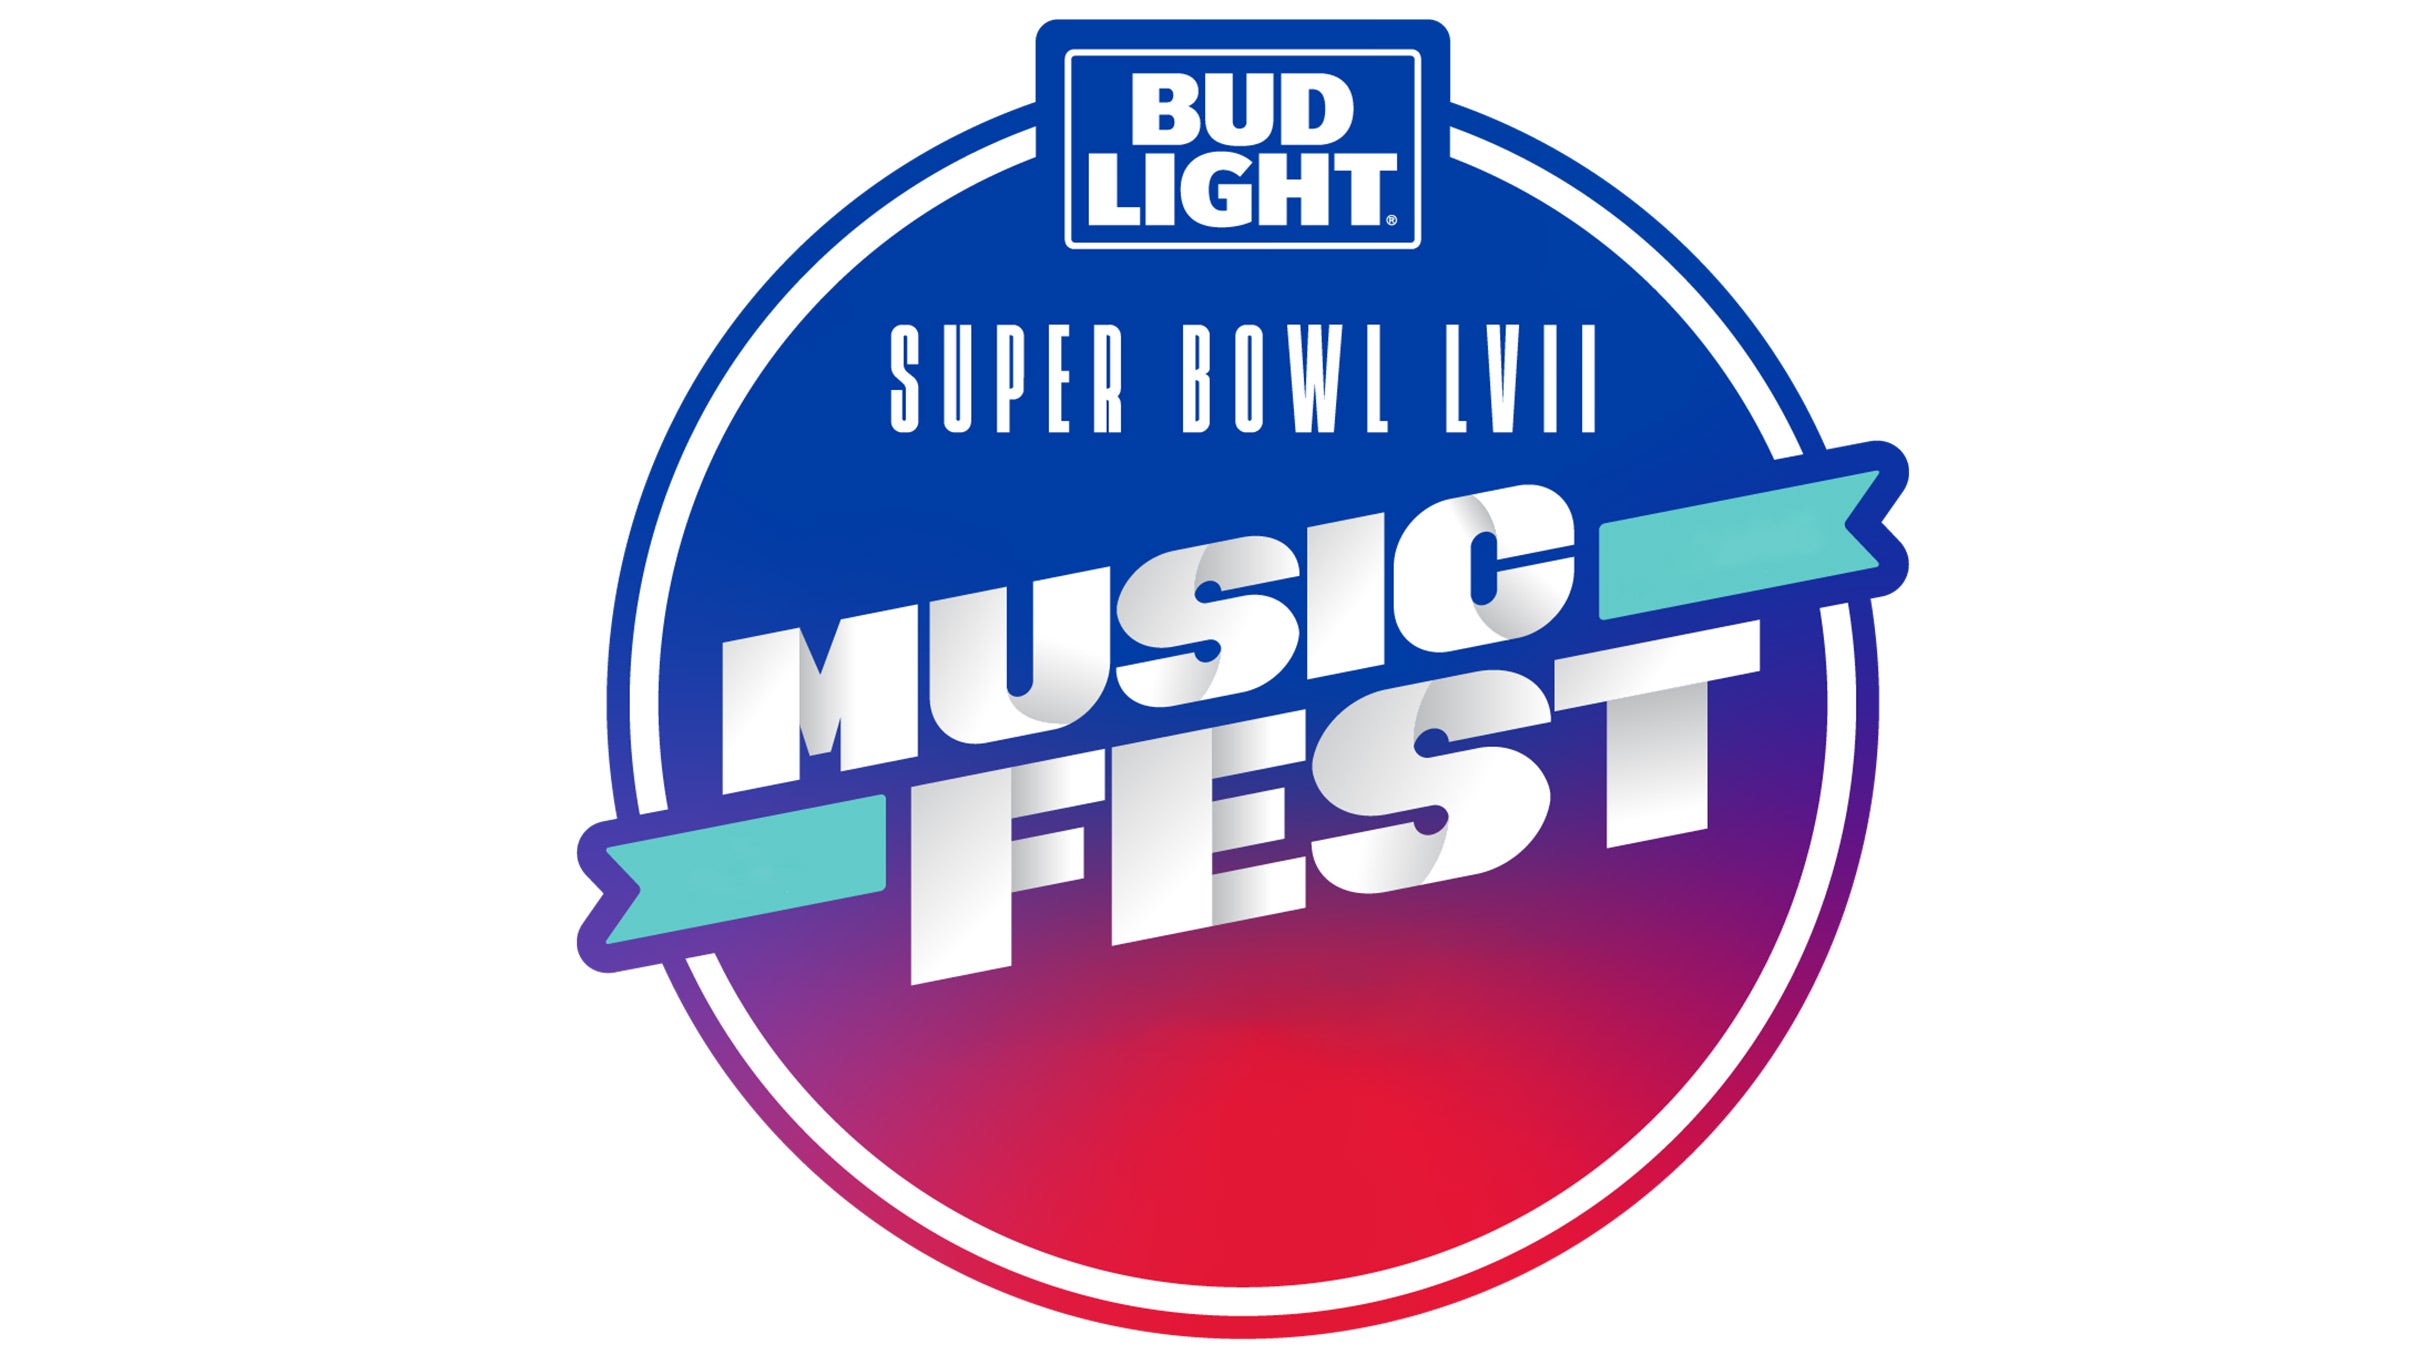 Bud Light Super Bowl Music Fest - Imagine Dragons and Kane Brown presale password for show tickets in Phoenix, AZ (Footprint Center)